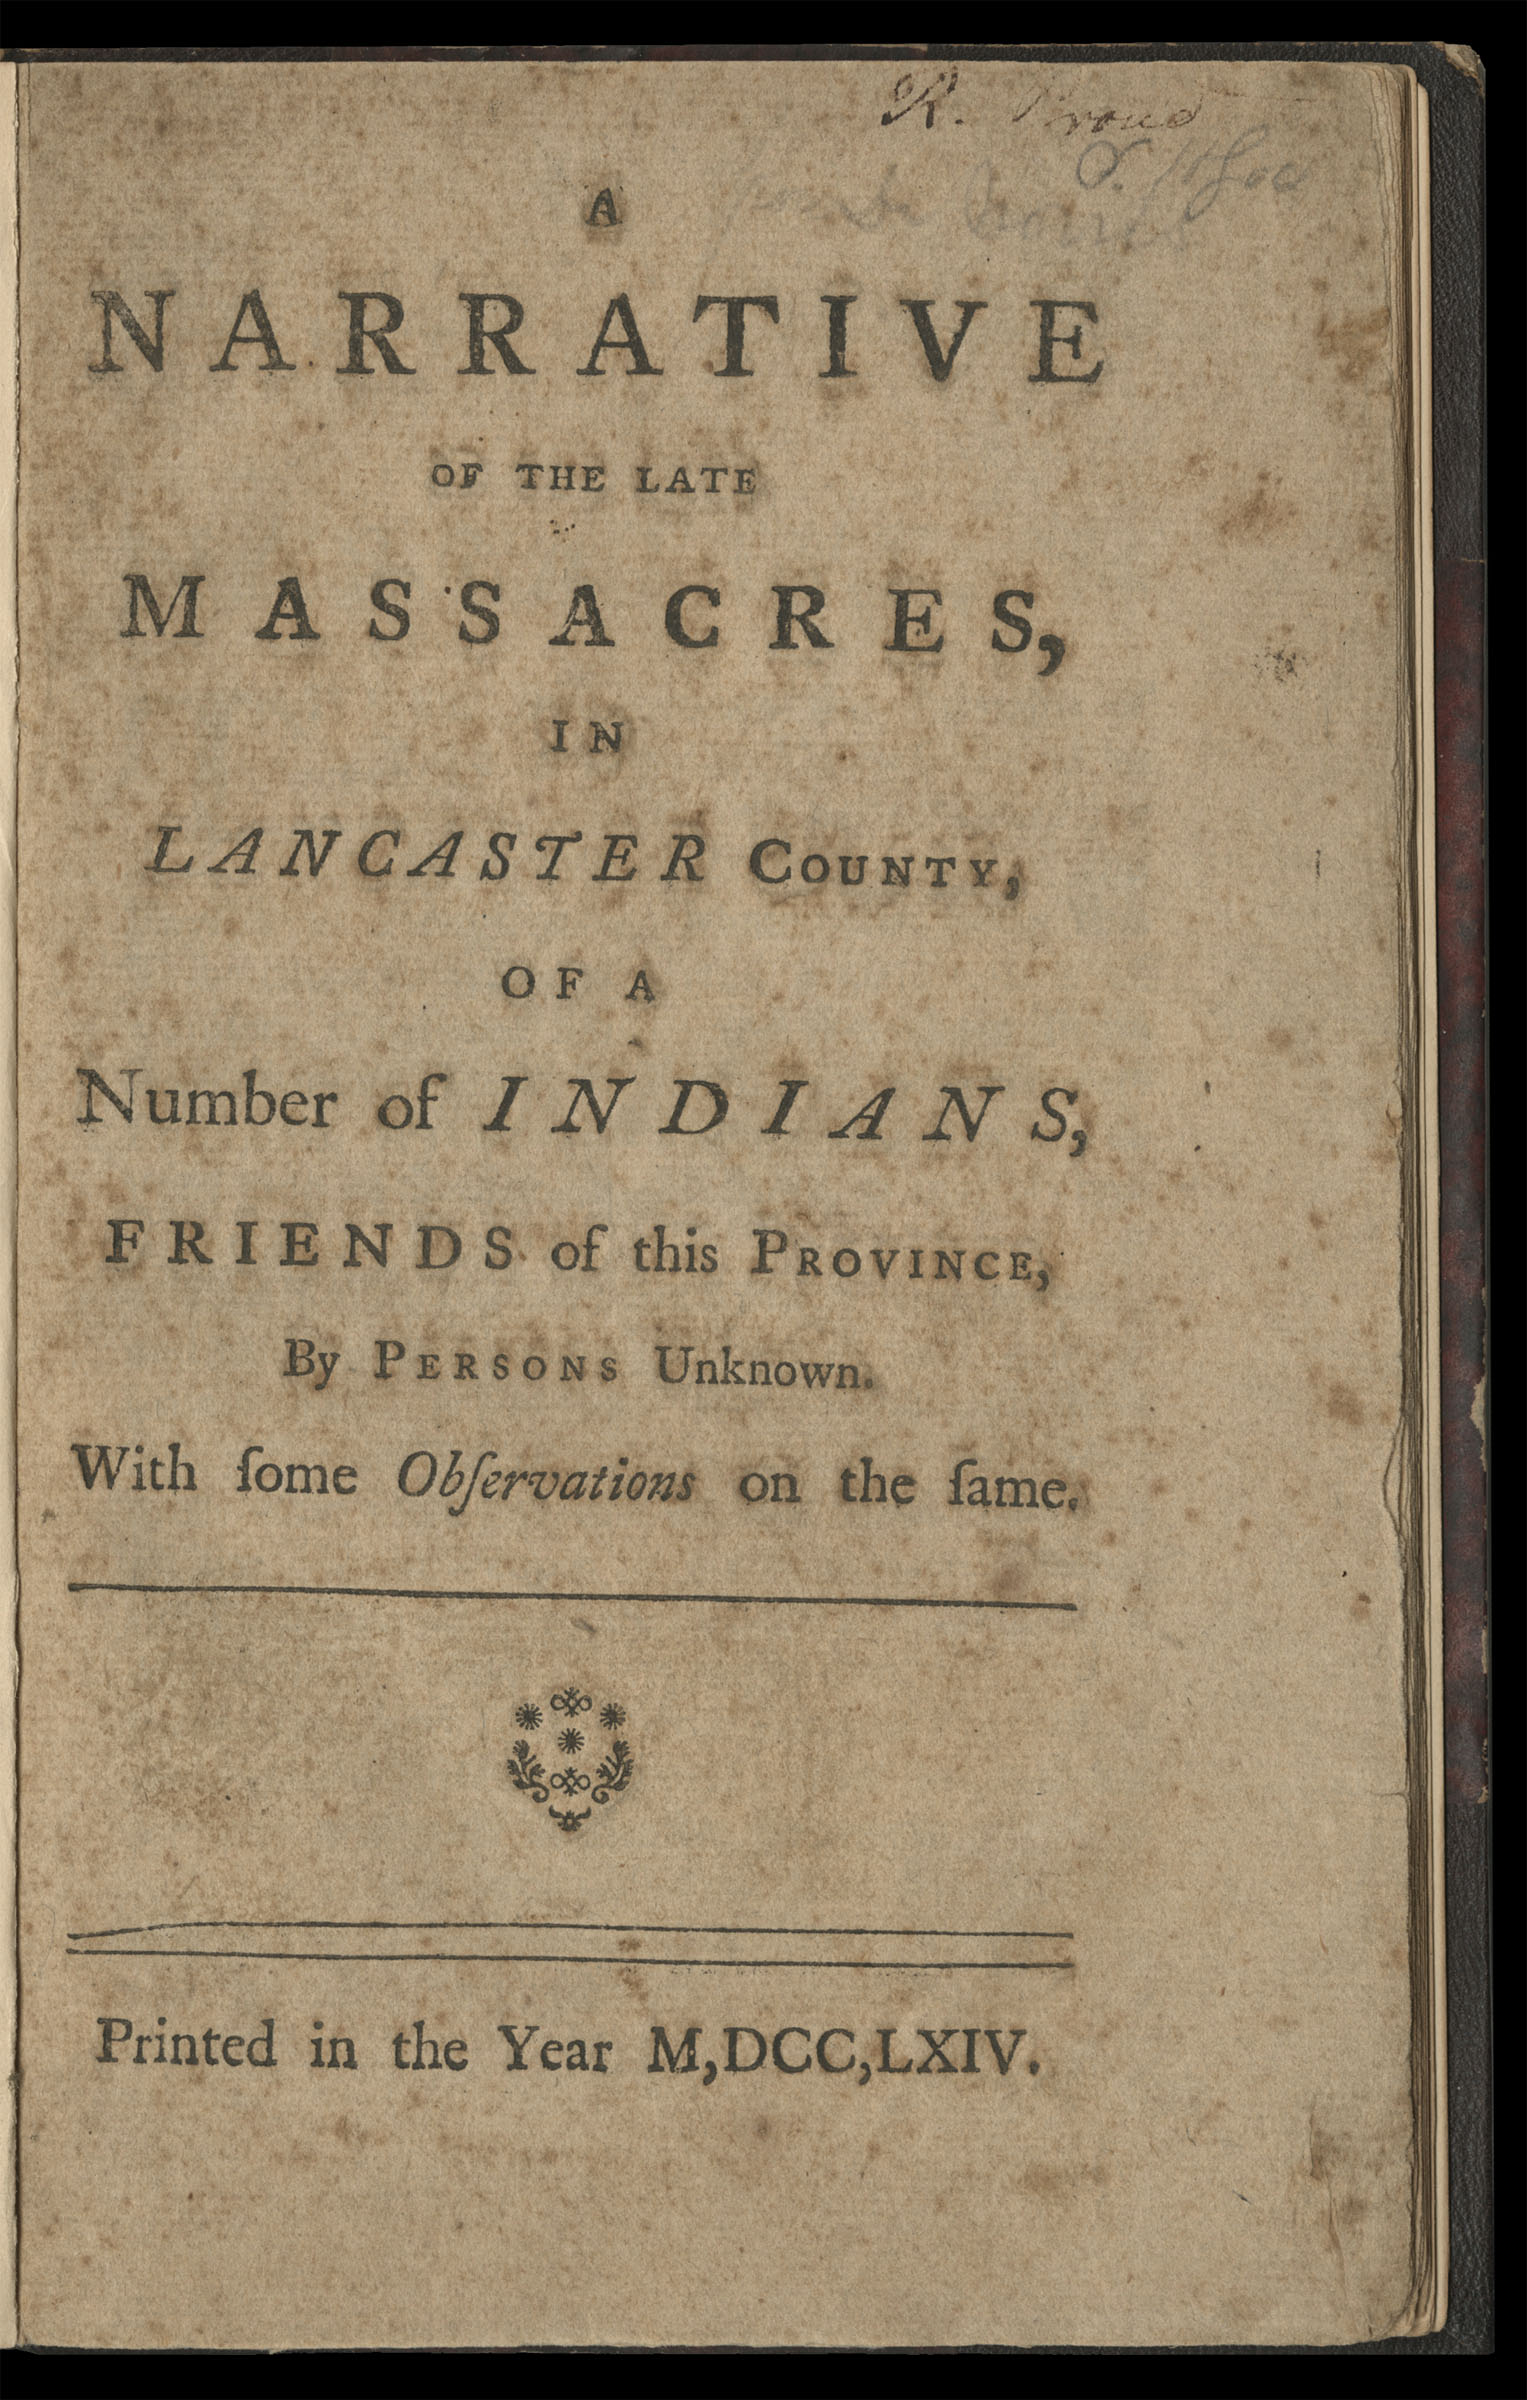 Massacres Late A the of Narrative